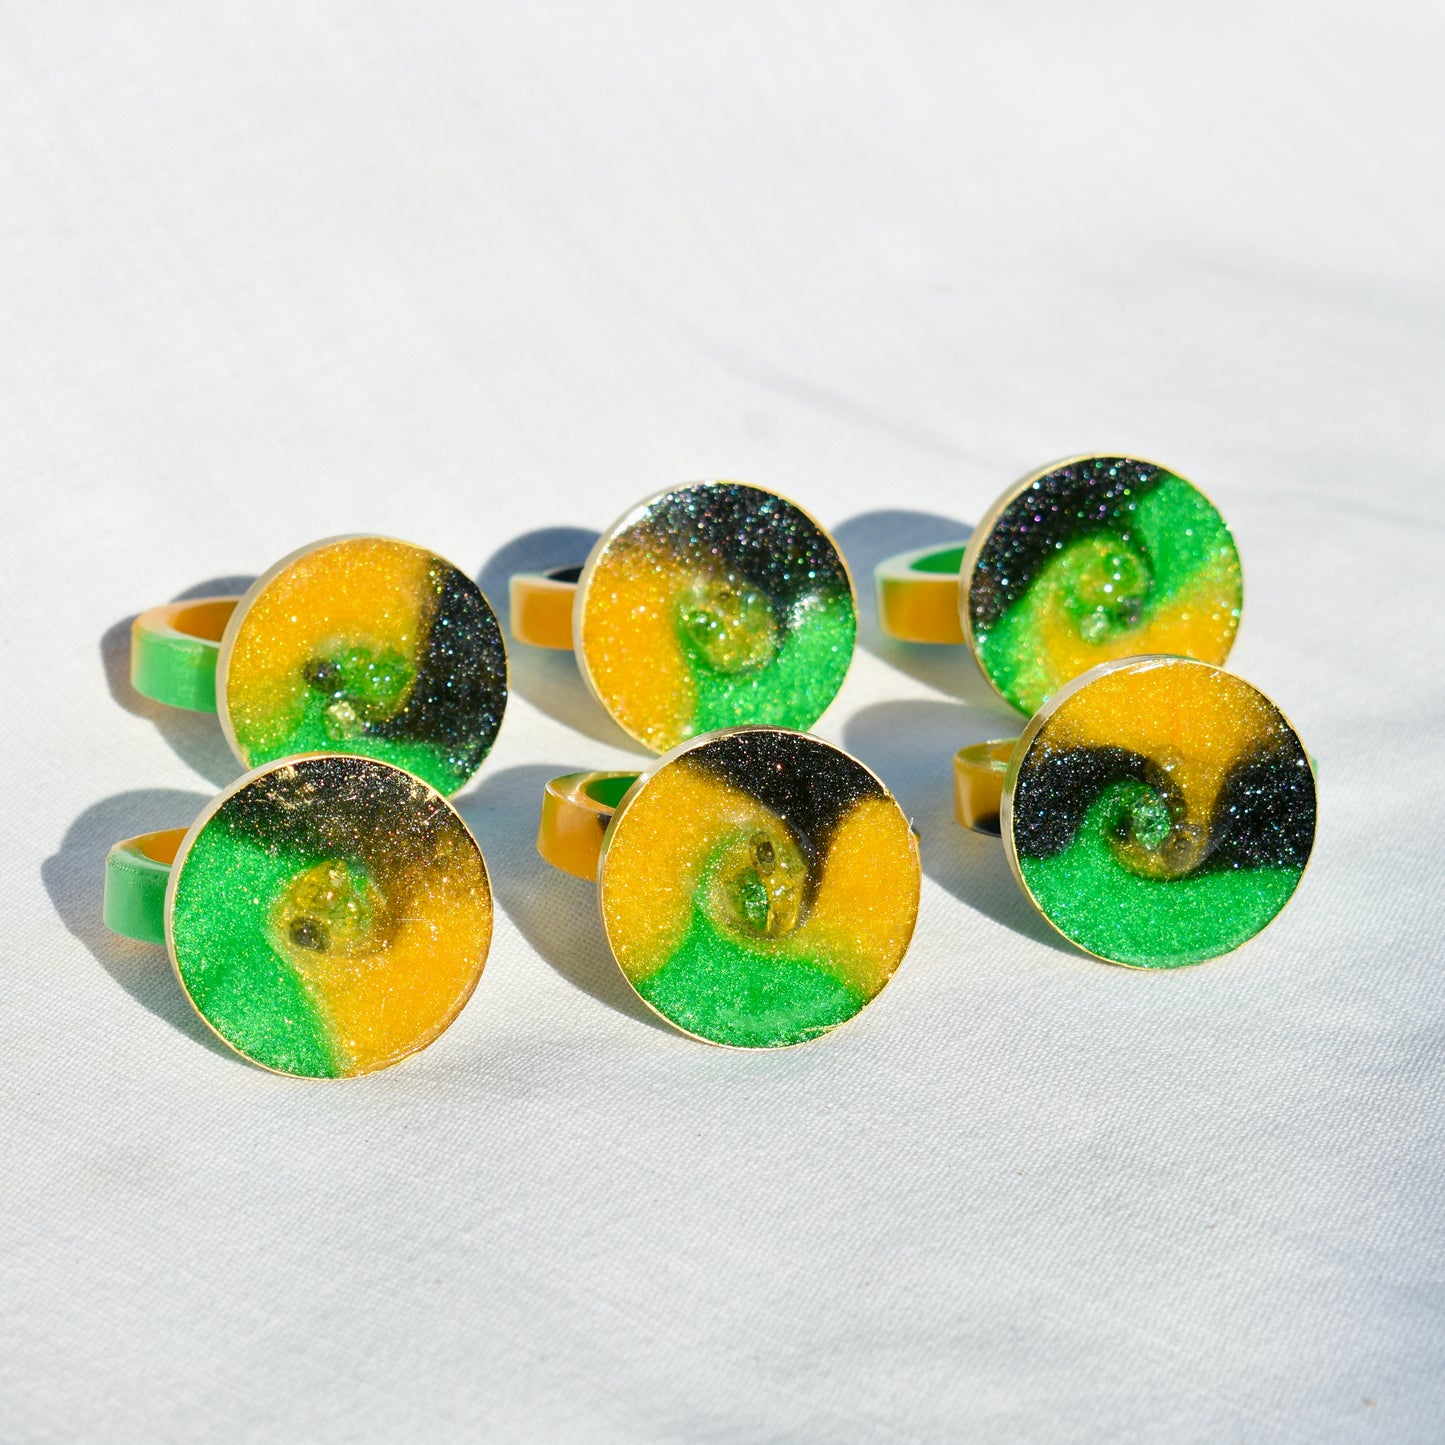 Jamaican Themed Napkin Rings (6)